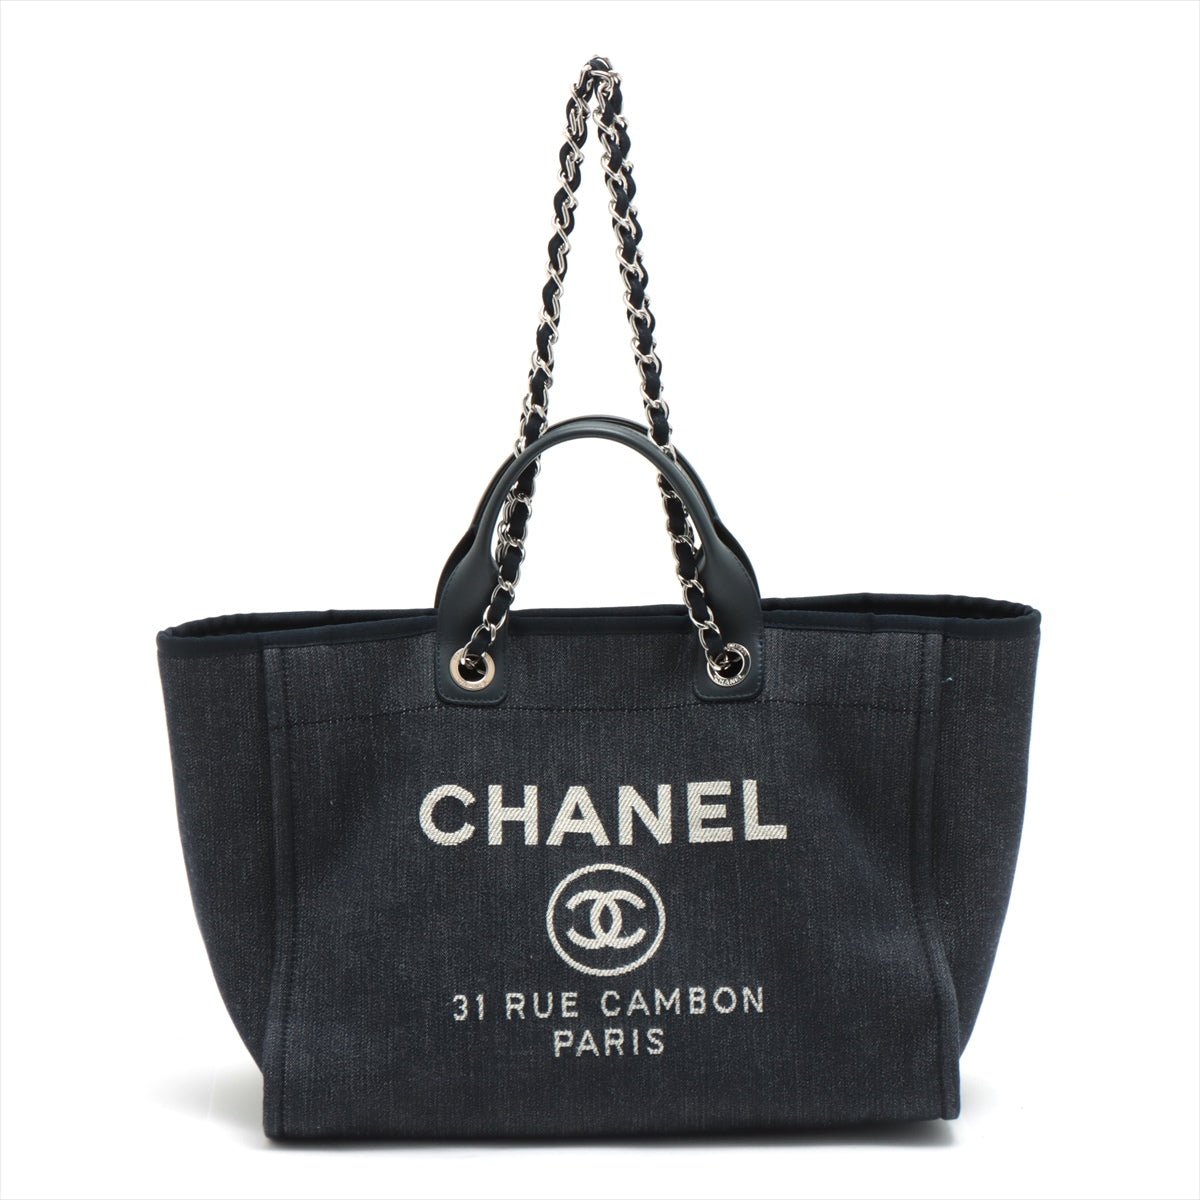 Chanel chanel deauville mm - Gem